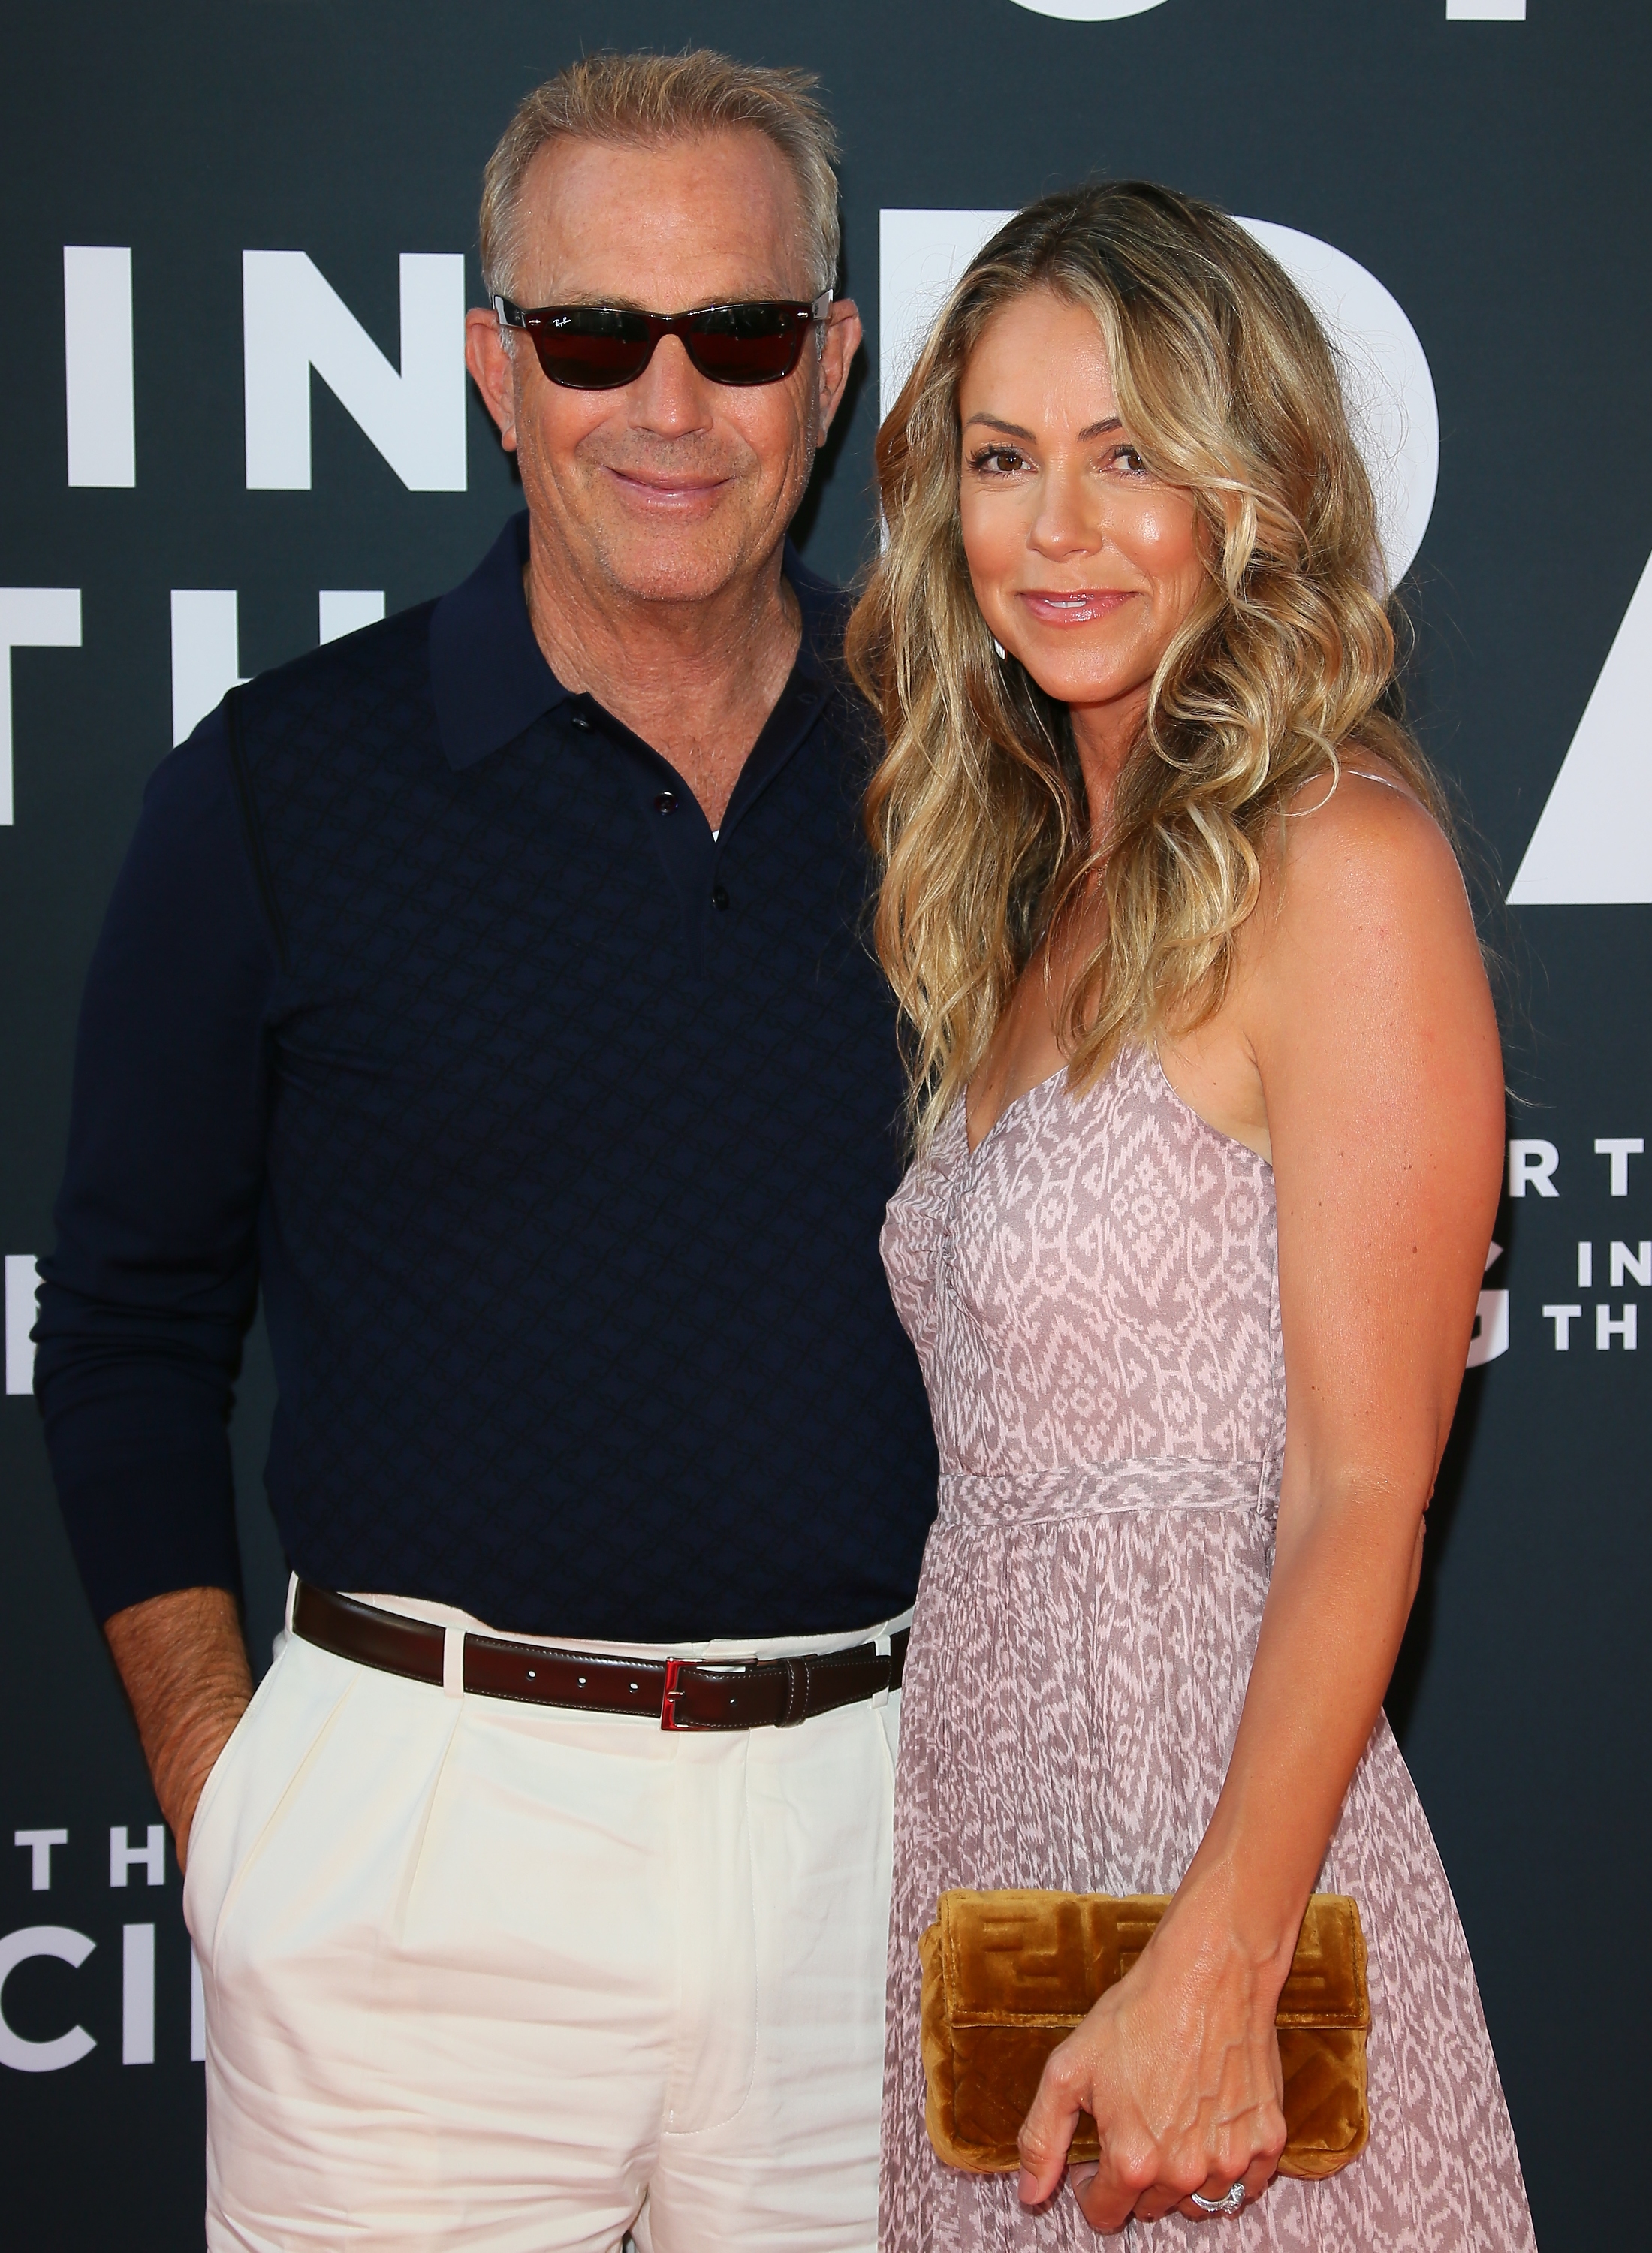 Kevin Costner and Christine Baumgartner in Los Angeles on August 1, 2019 | Source: Getty Images